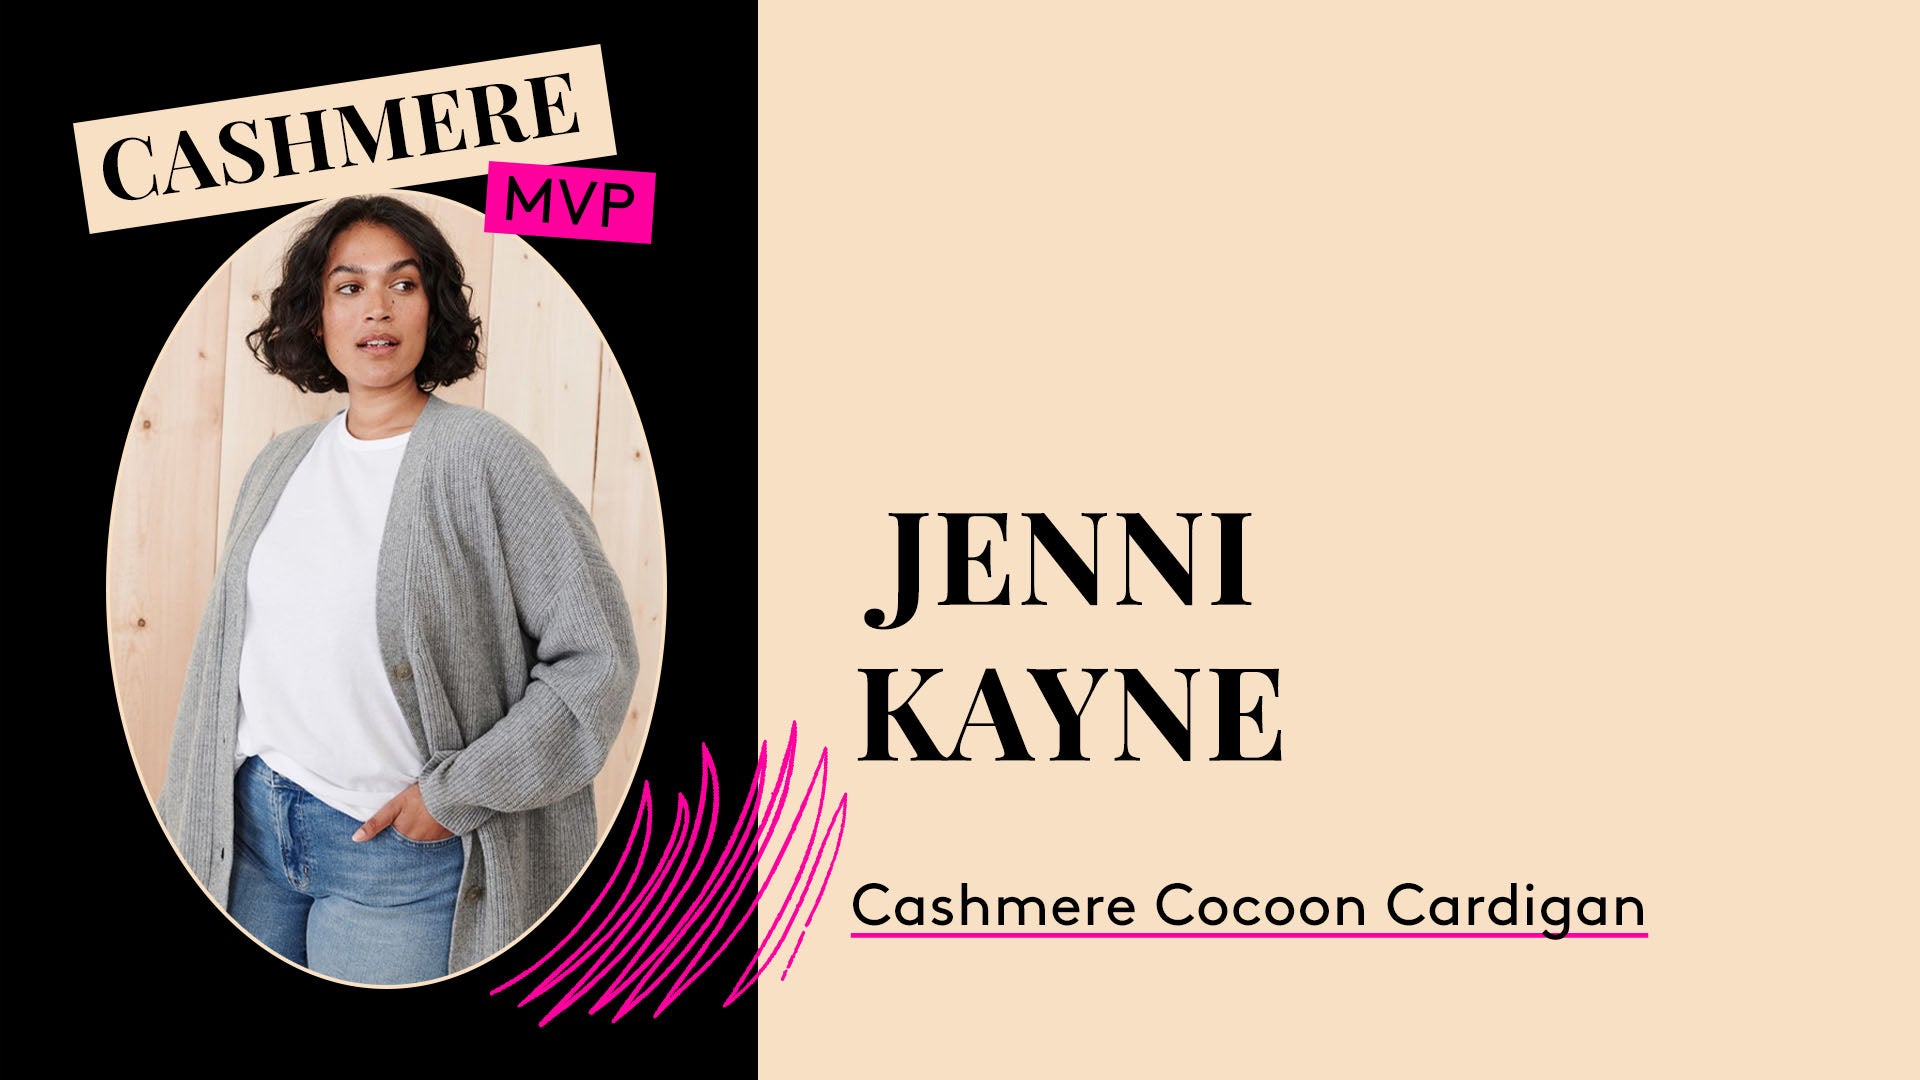 Cashmere MVP. Jenni Kayne Cashmere Cocoon Cardigan.